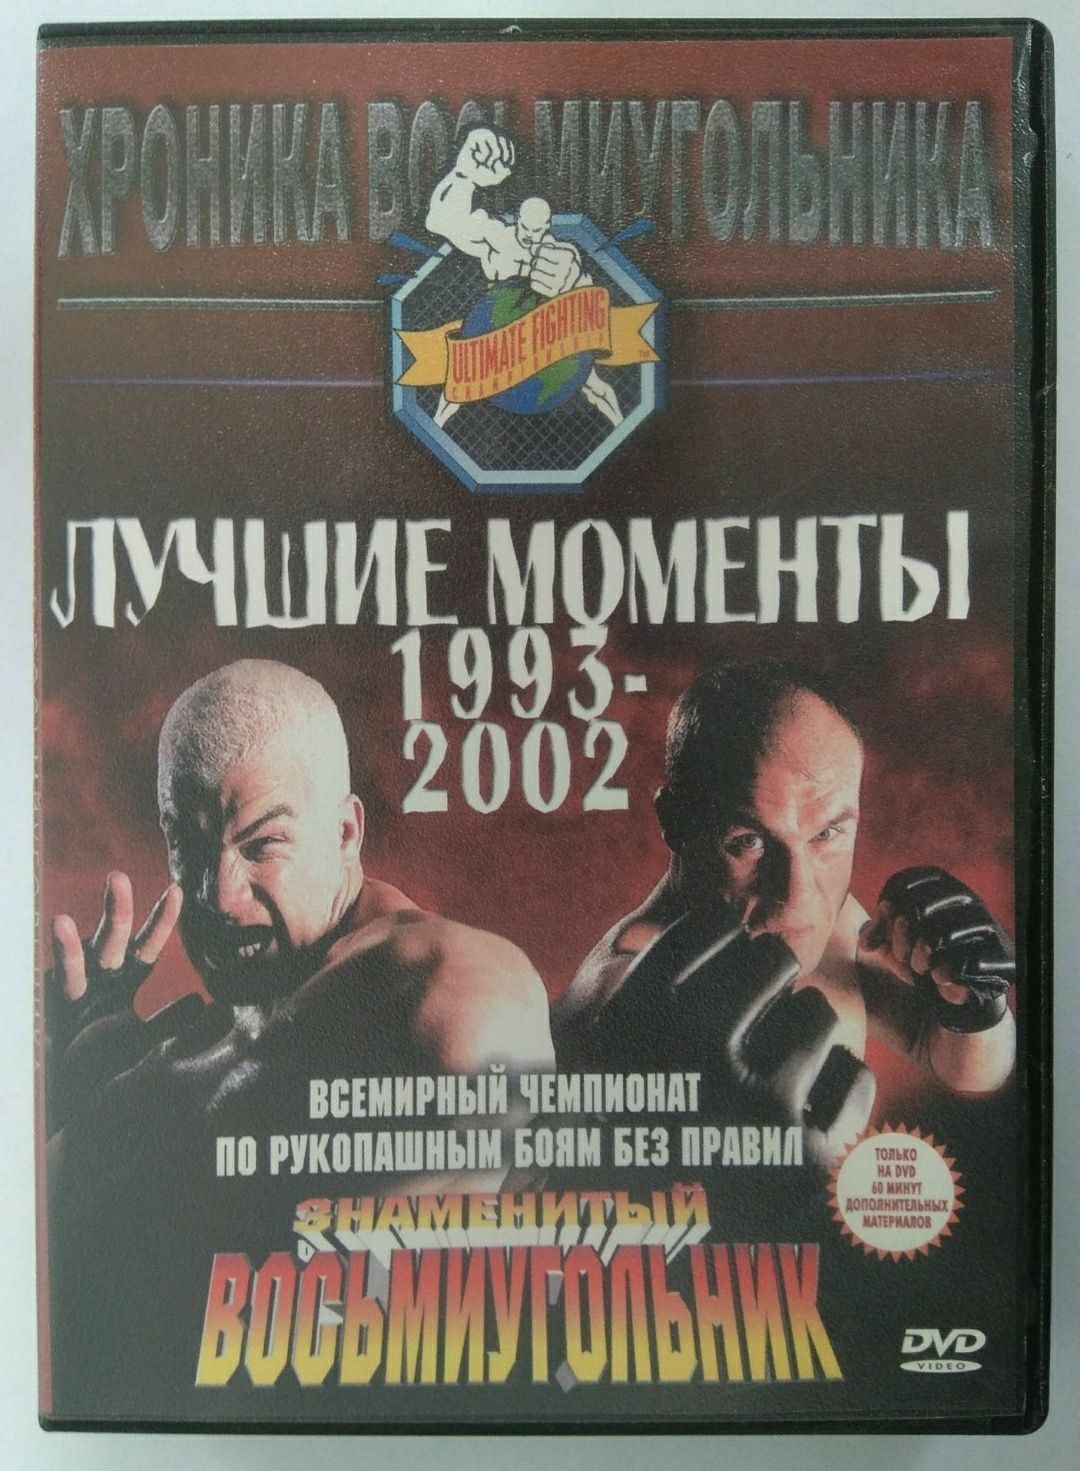 DVD "Бои без правил. Хроники восьмиугольника"